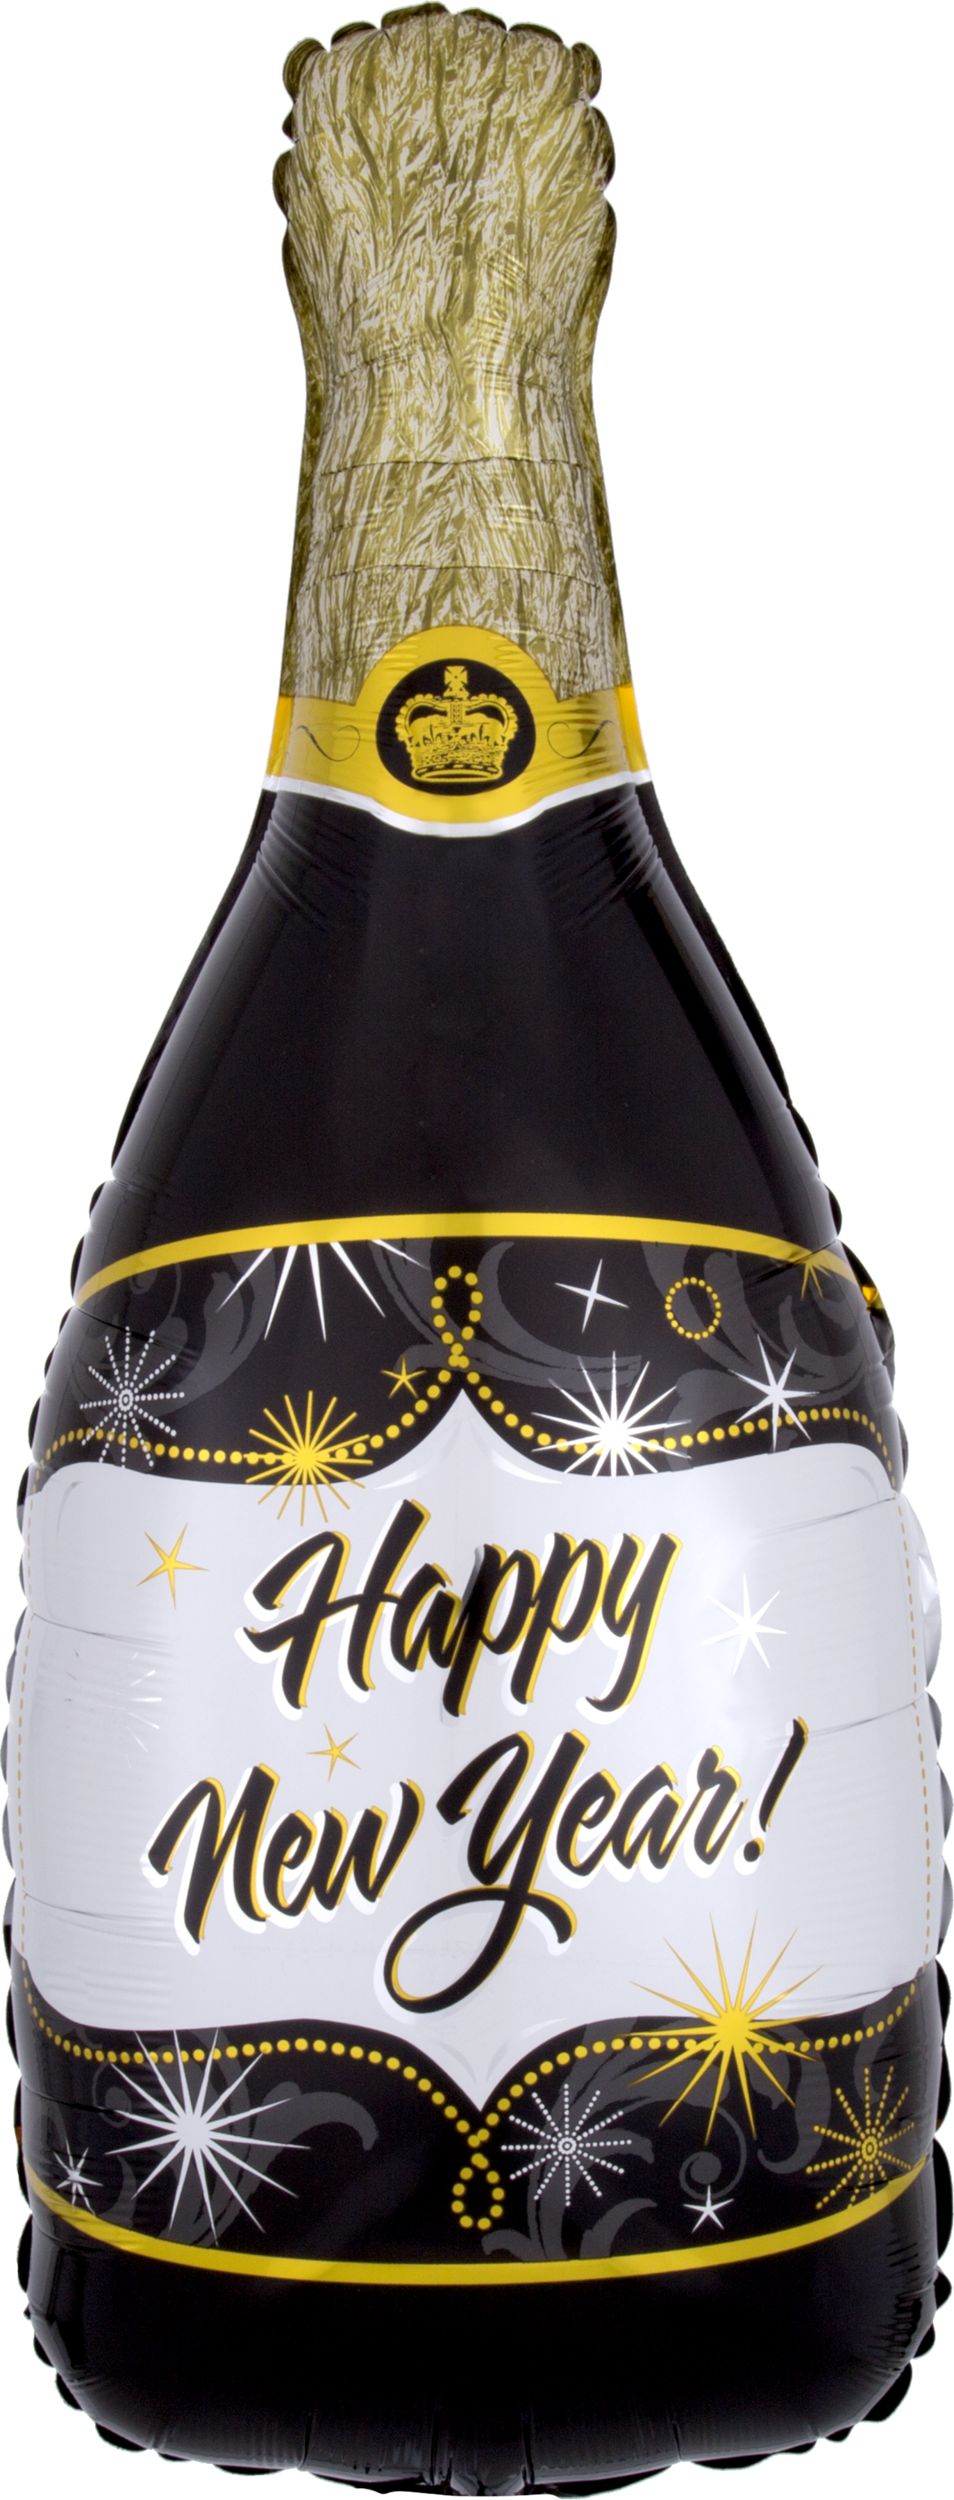 Ballon nouvel an - happy new year - bouteille holographique - 90